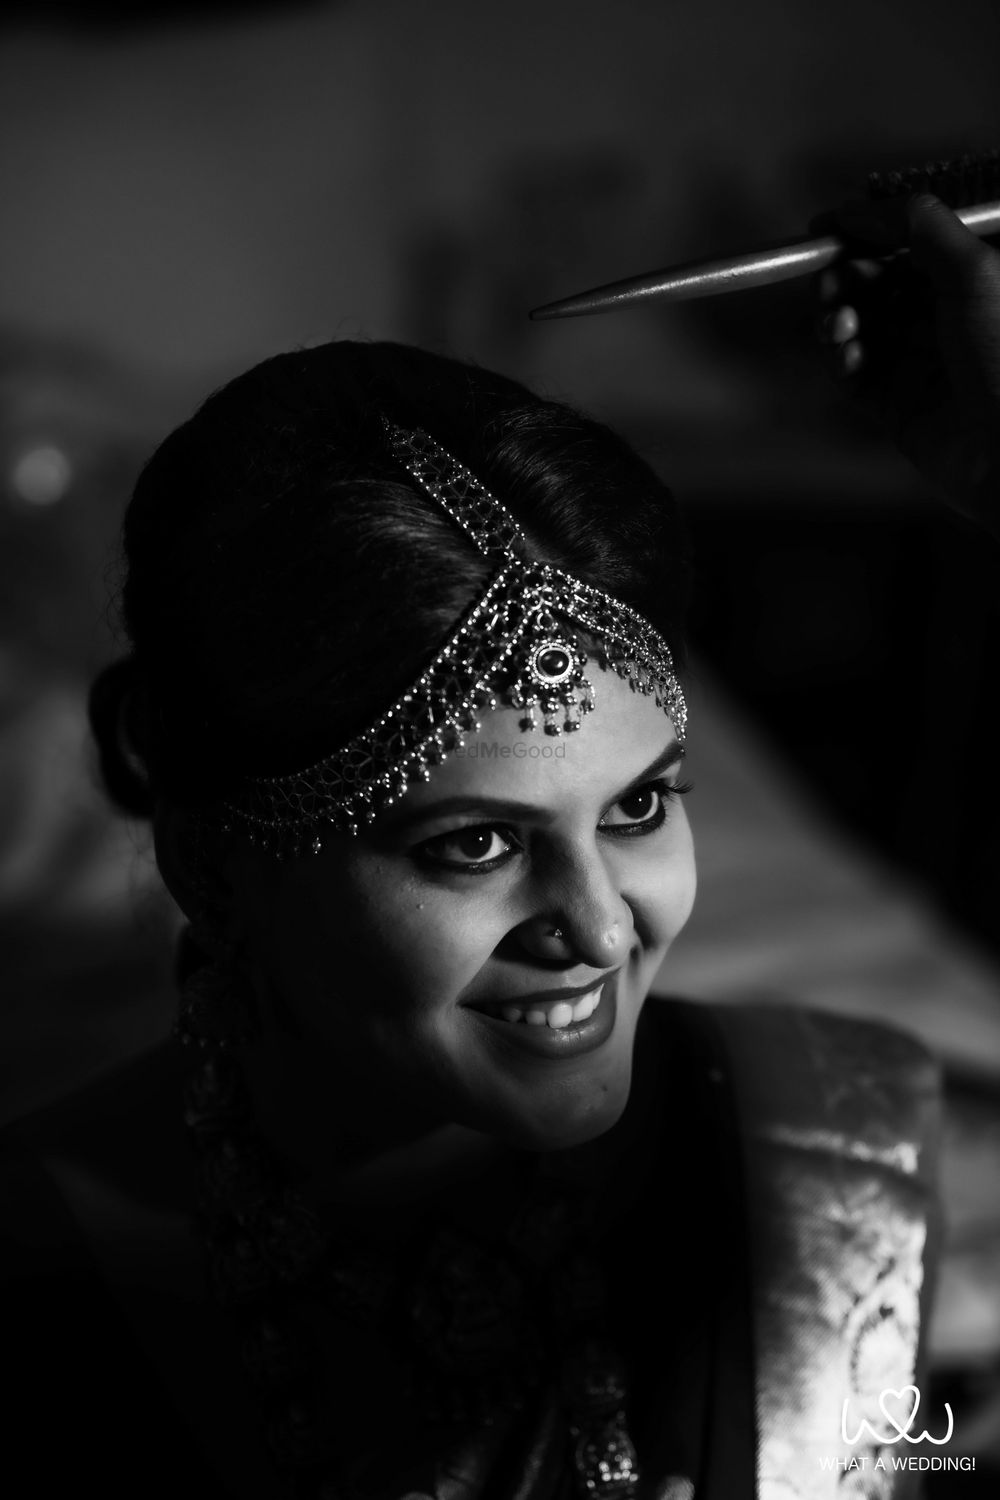 Photo From Veena Jayaram - By What A Wedding